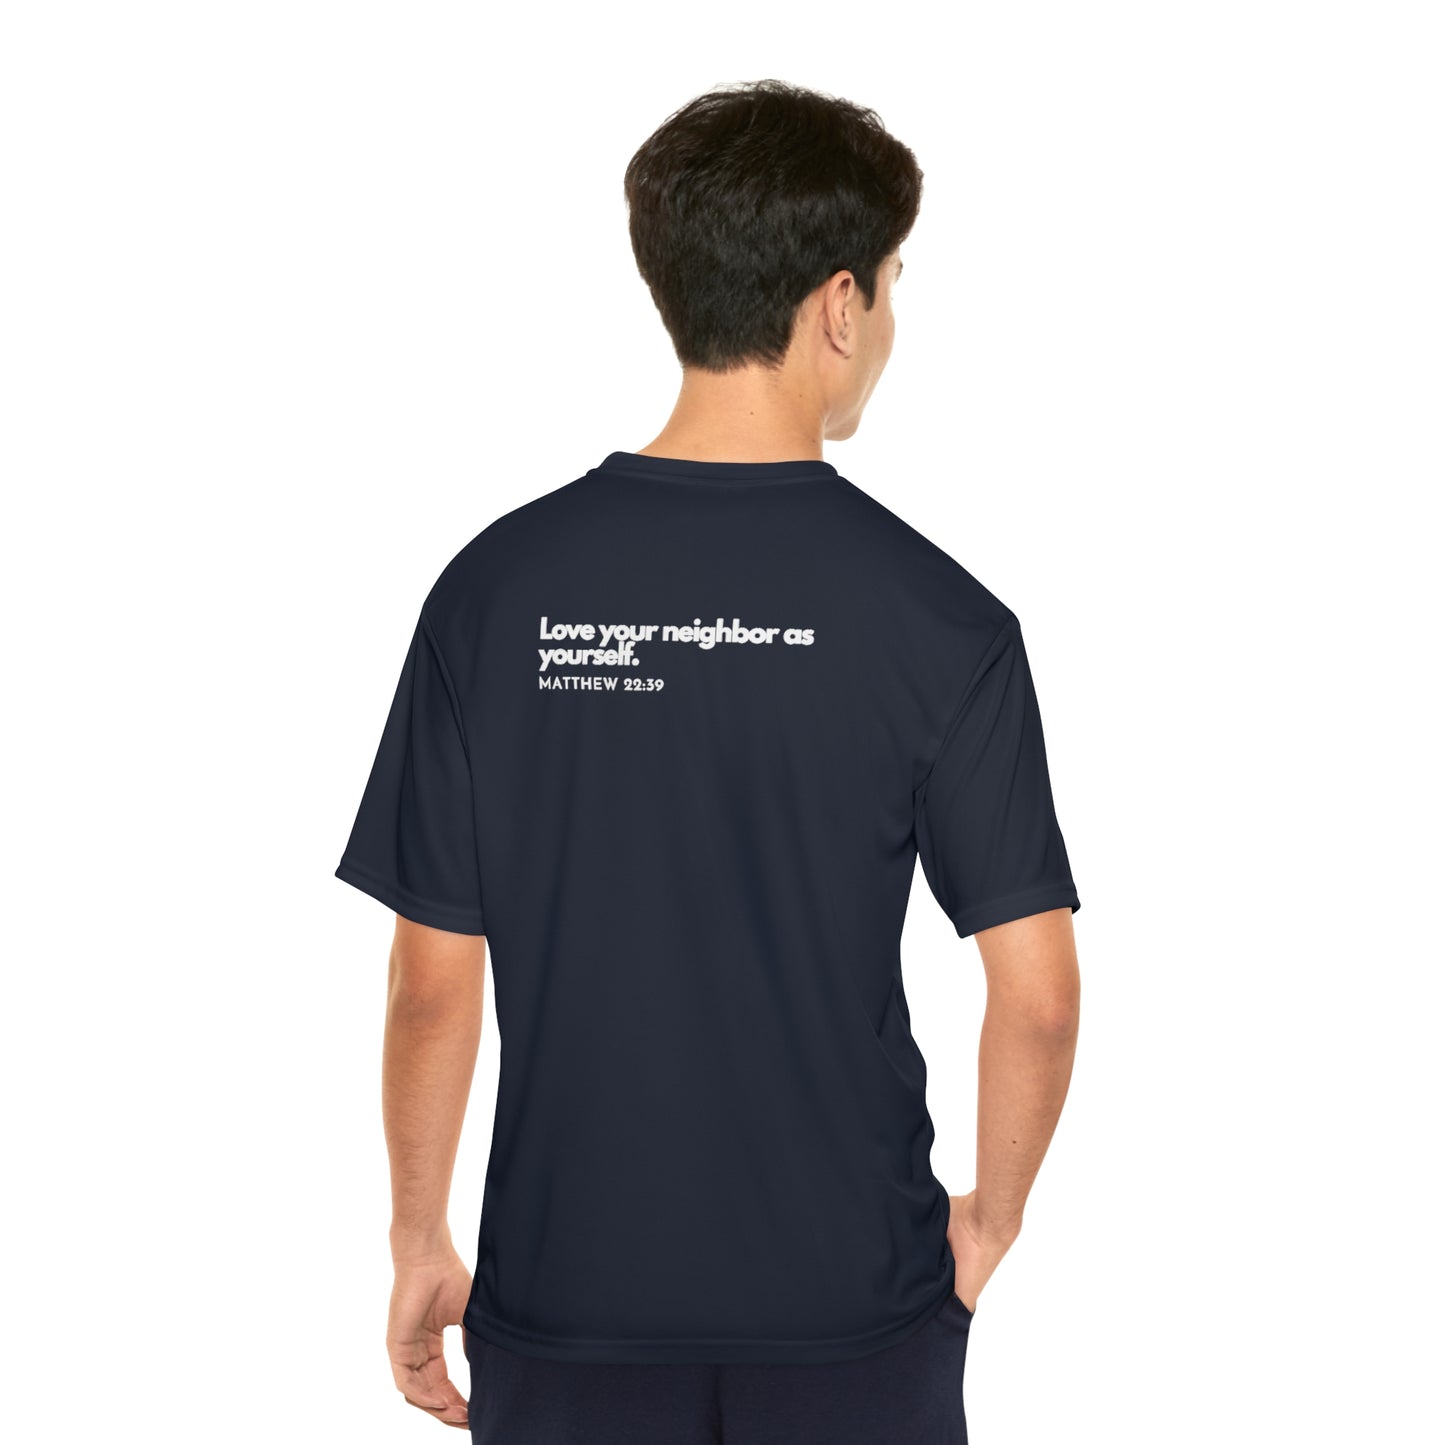 Deuteronomy 6:5, Men's Performance T-Shirt